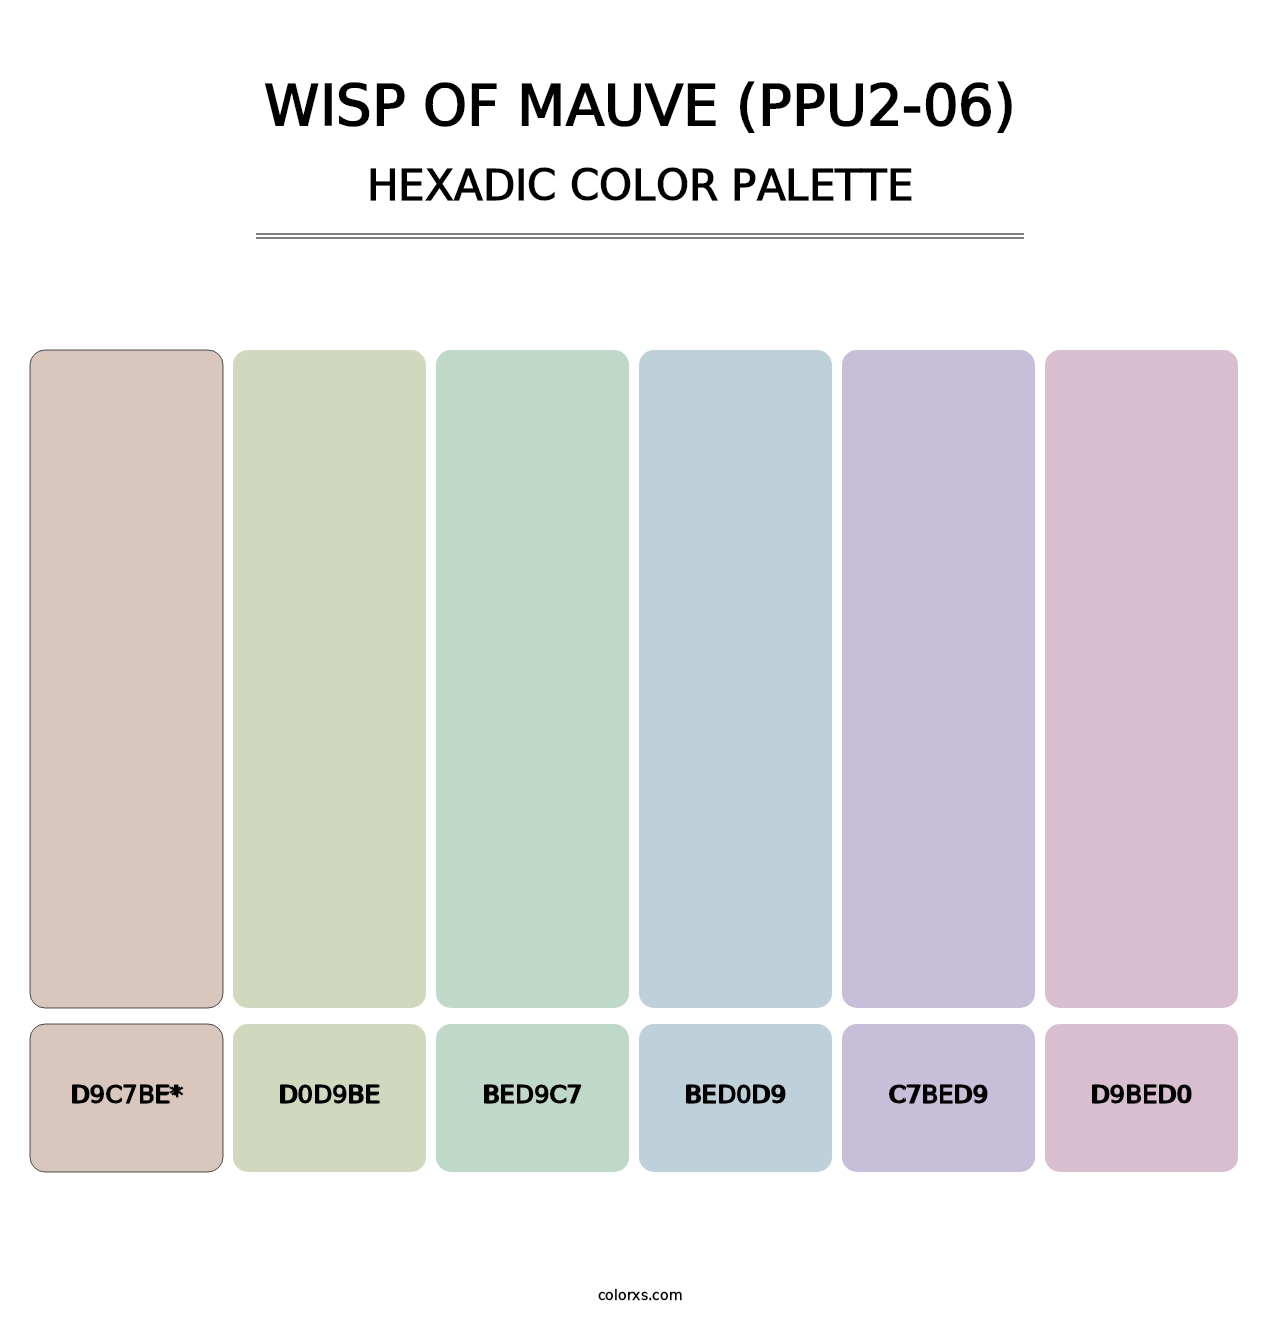 Wisp Of Mauve (PPU2-06) - Hexadic Color Palette